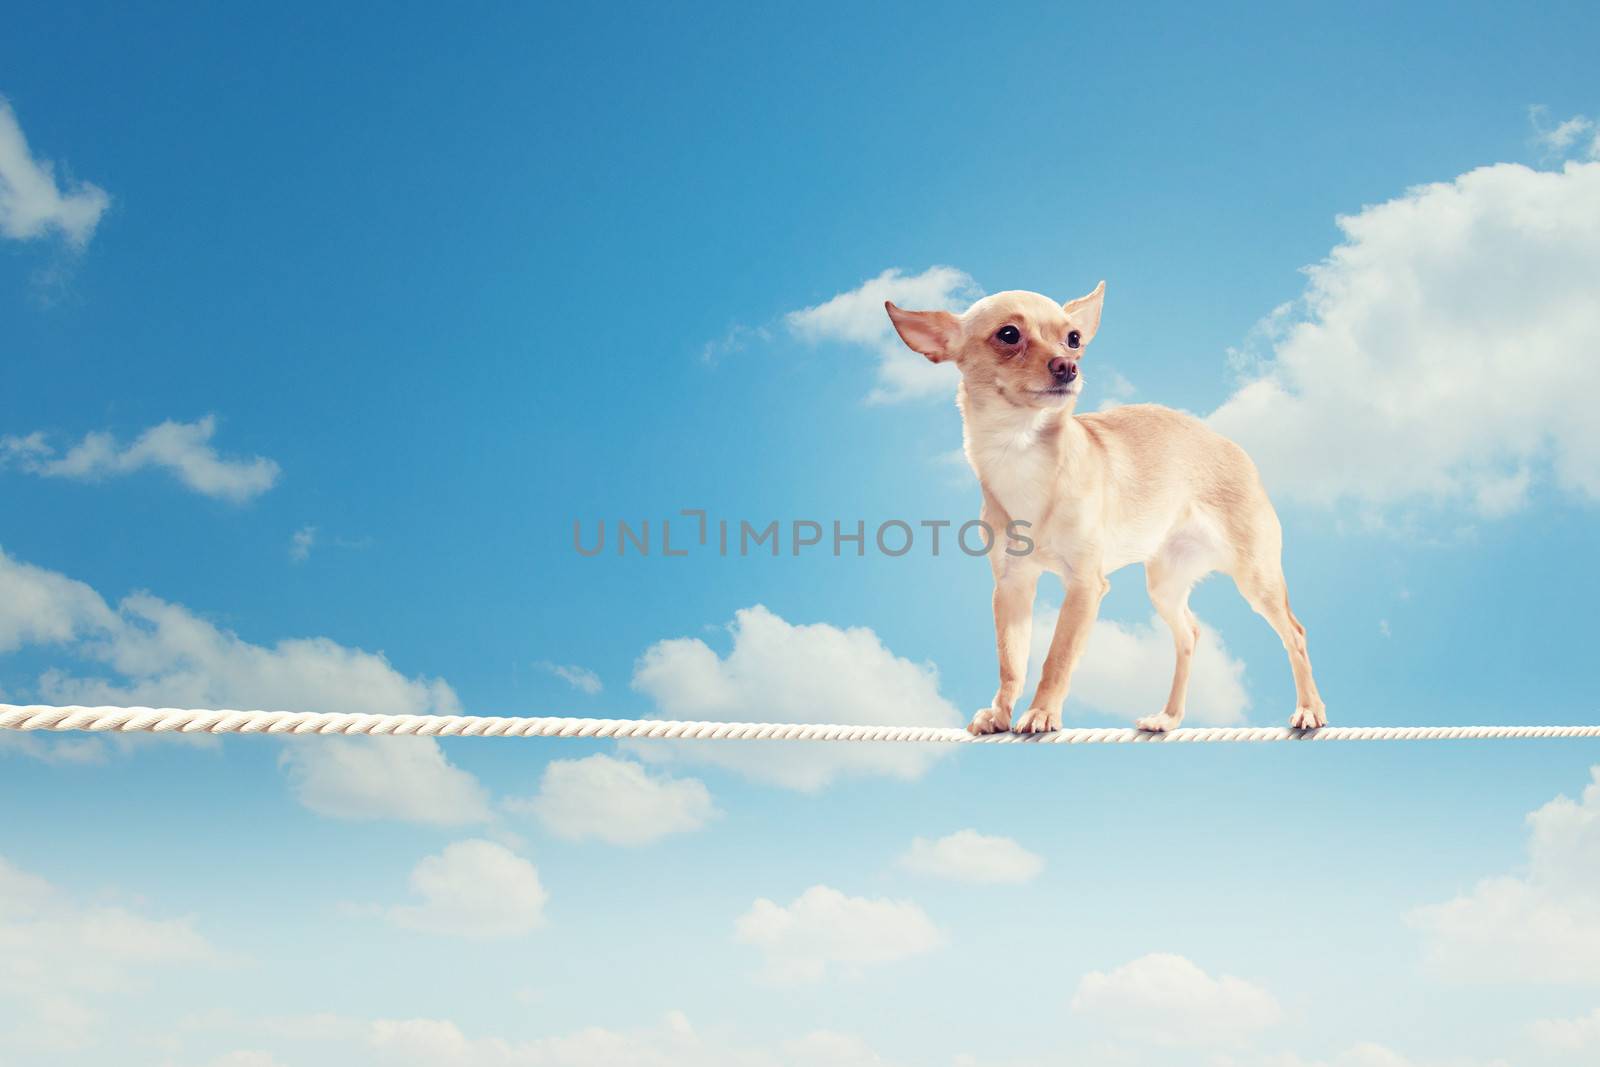 Image of little dog balancing on rope